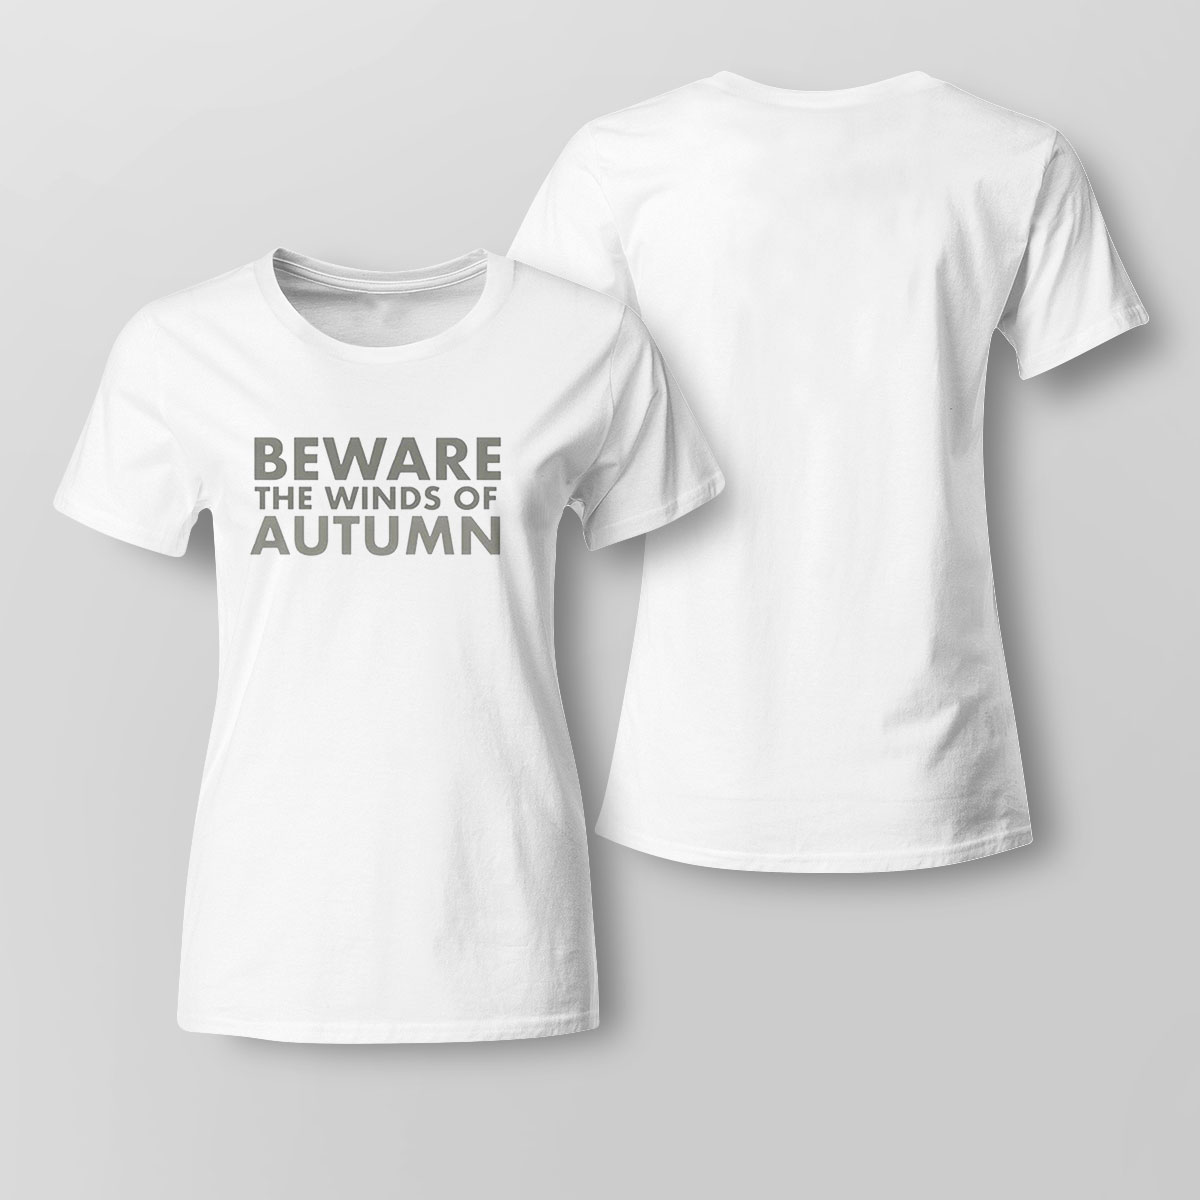 Beware The Winds Of Autumn Las Vegas Football Shirt Ladies T-shirt